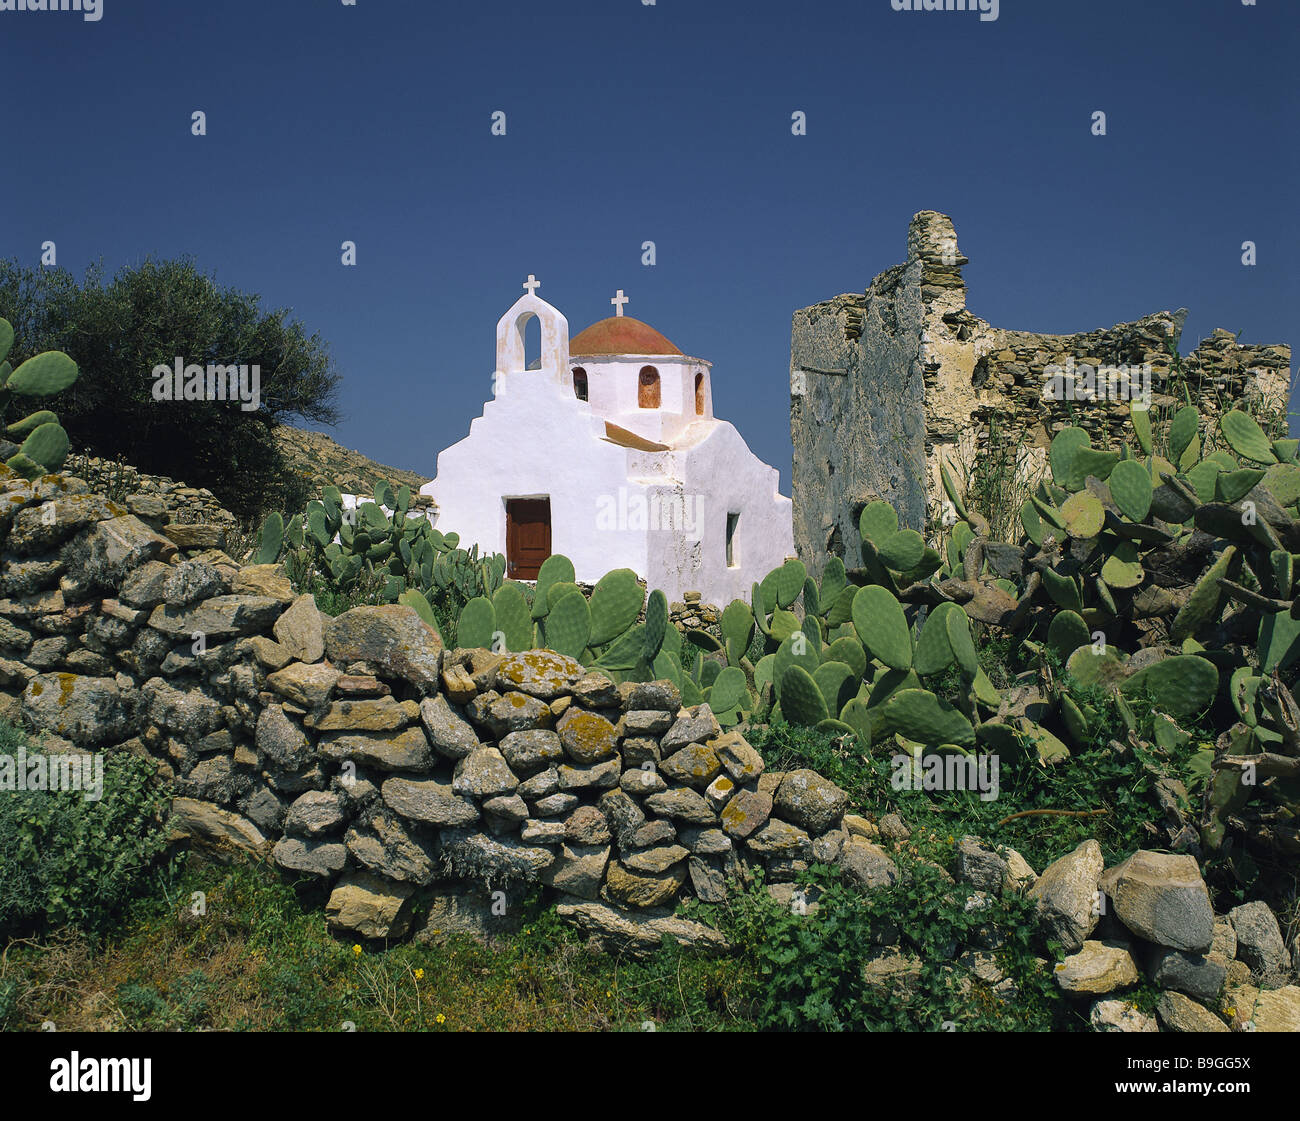 Greece Cyclades island Mykonos Ano Mera stone-wall ruin church Aegean  mountain-village cacti nature stone -wall chapel Lord's Stock Photo - Alamy